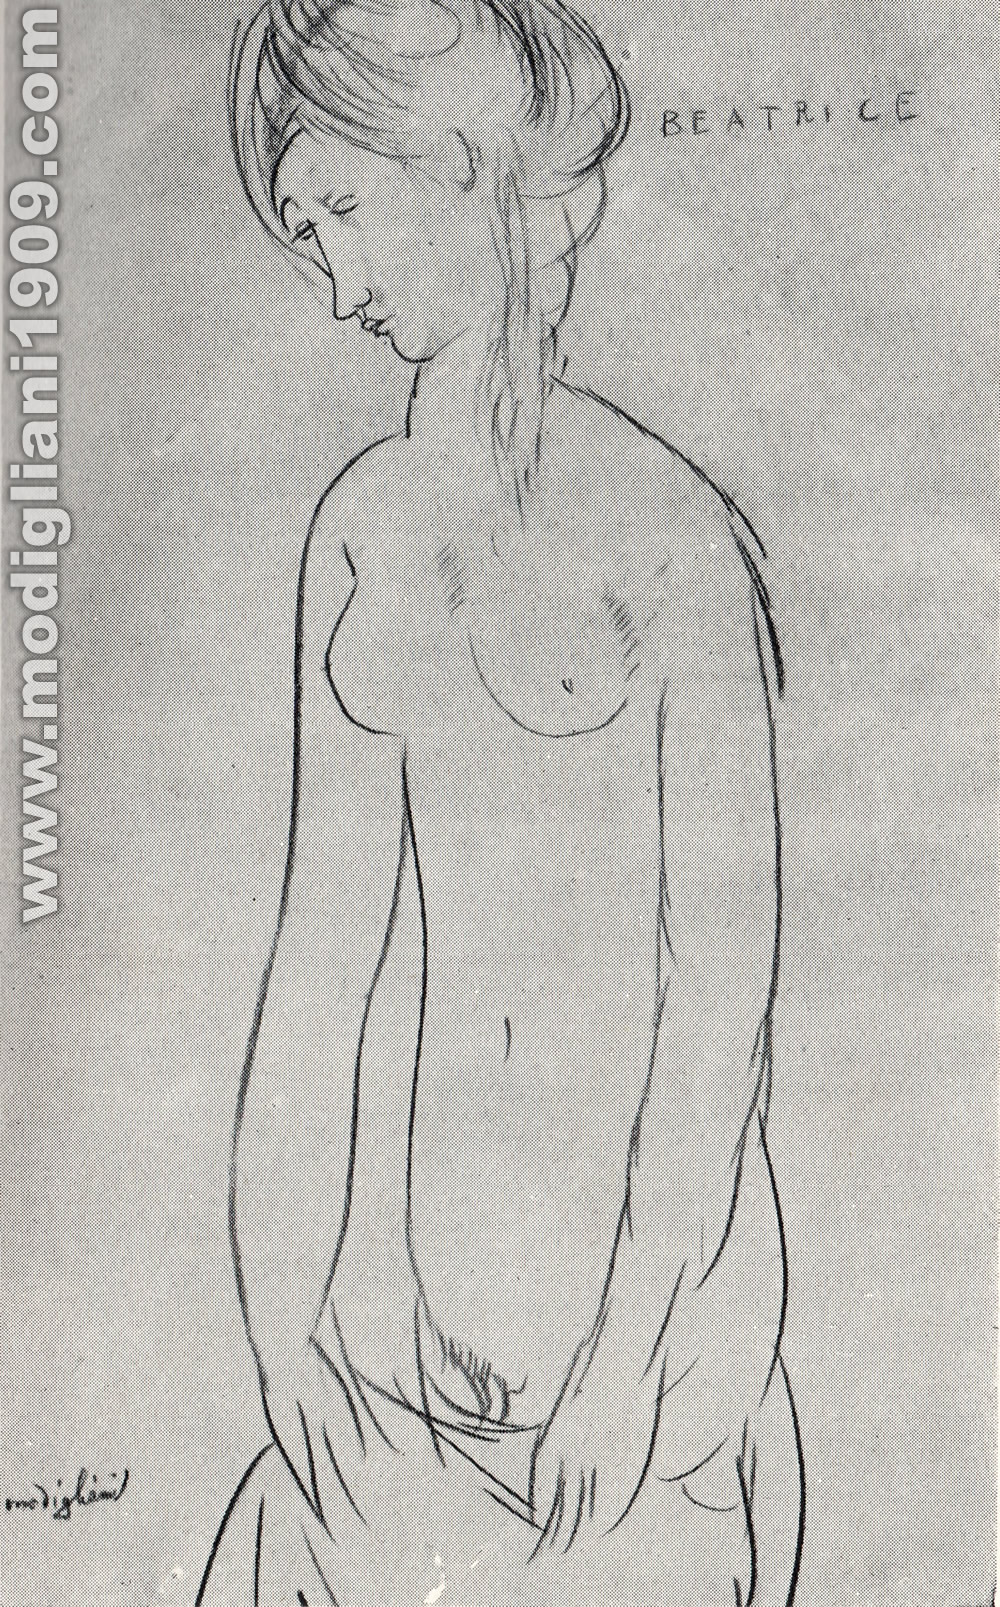 Amedeo Modigliani - Beatrice - 1916 - Parigi. Collezione Dr. Sabouraud